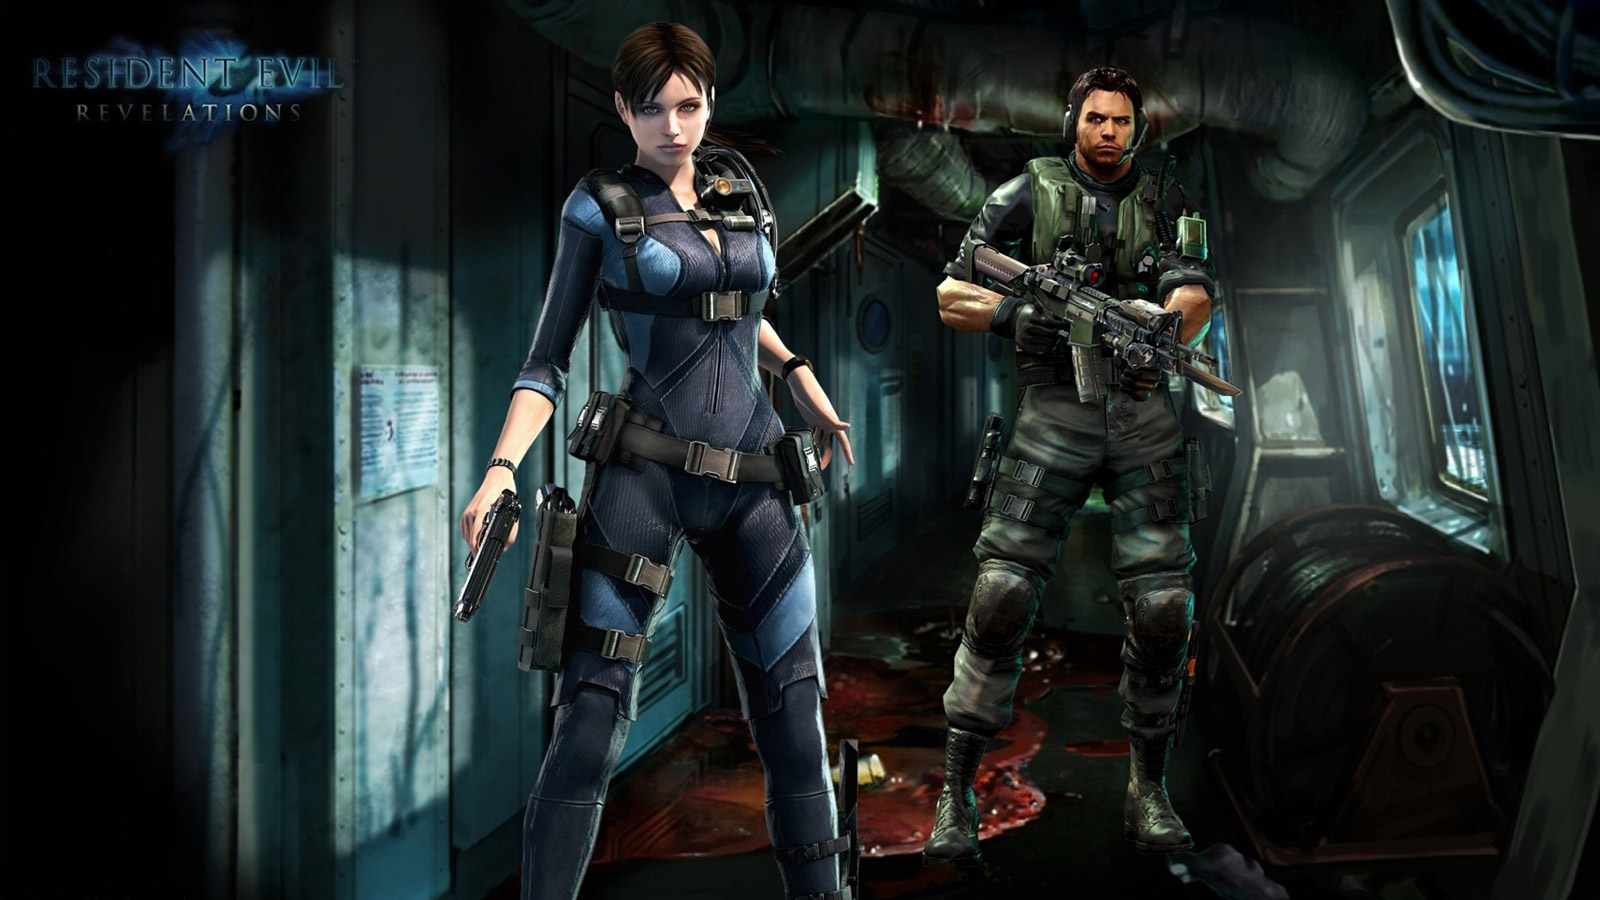 Resident Evil: Revelations Backgrounds on Wallpapers Vista